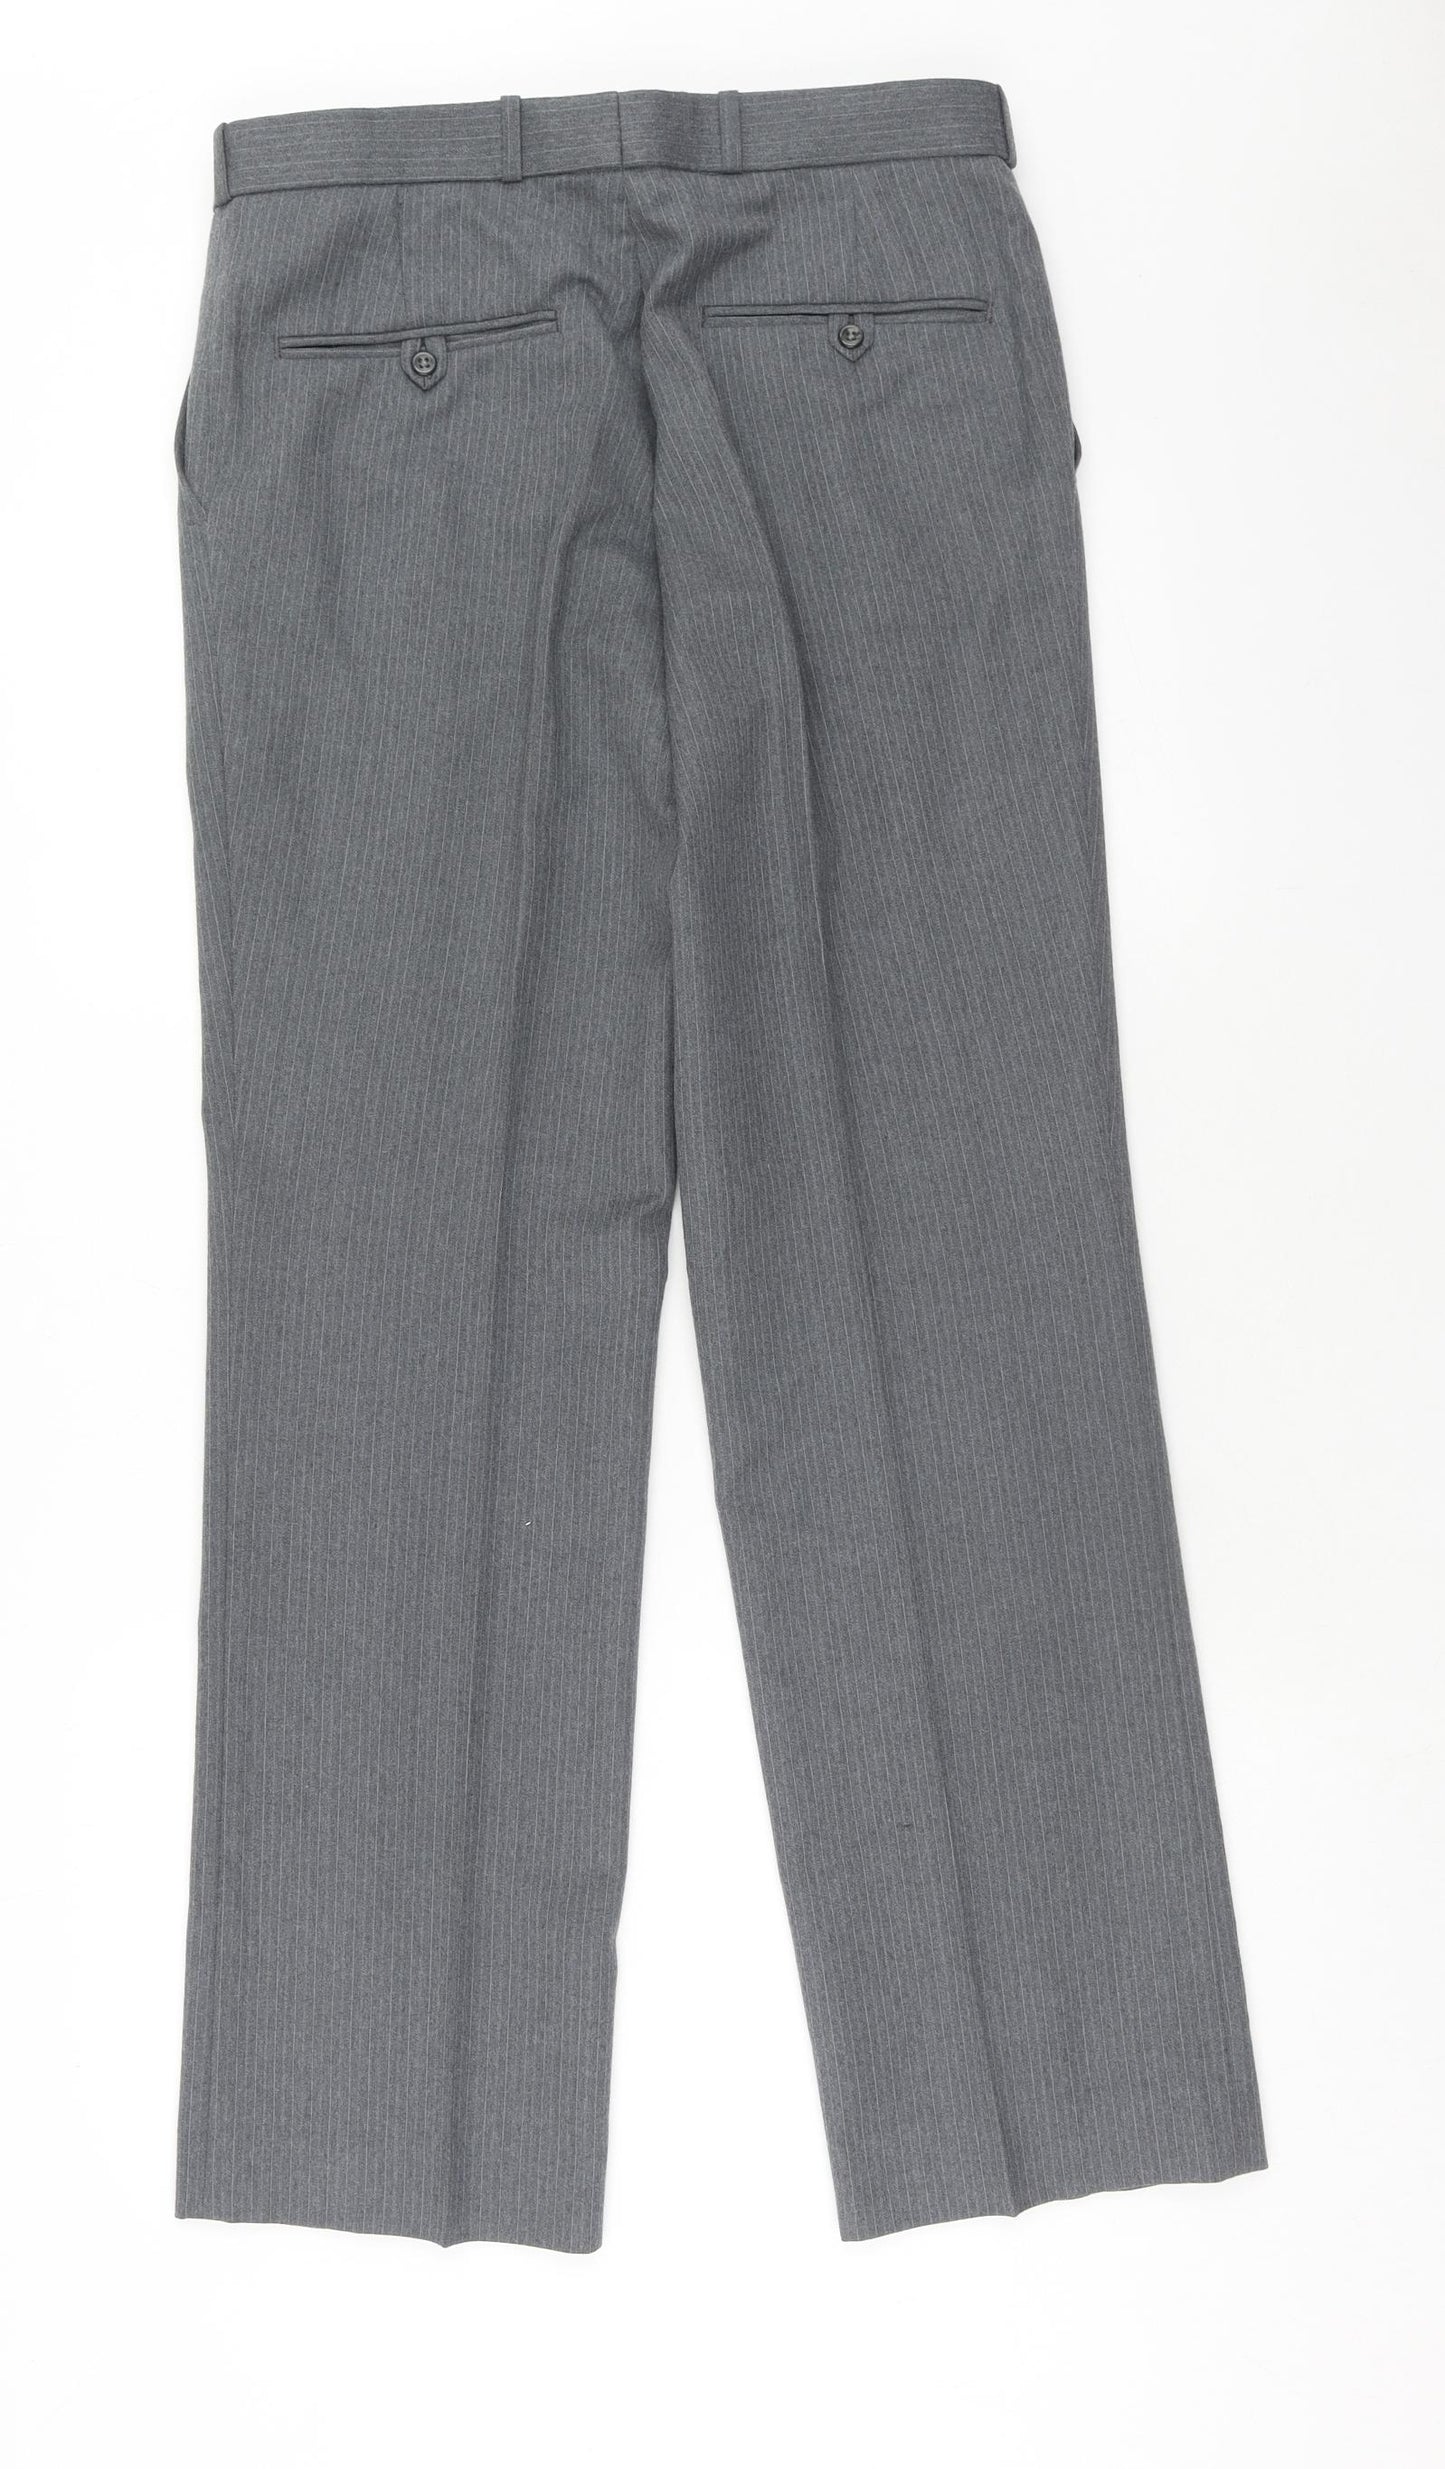 Preworn Mens Grey Wool Dress Pants Trousers Size 32 in Regular Hook & Eye